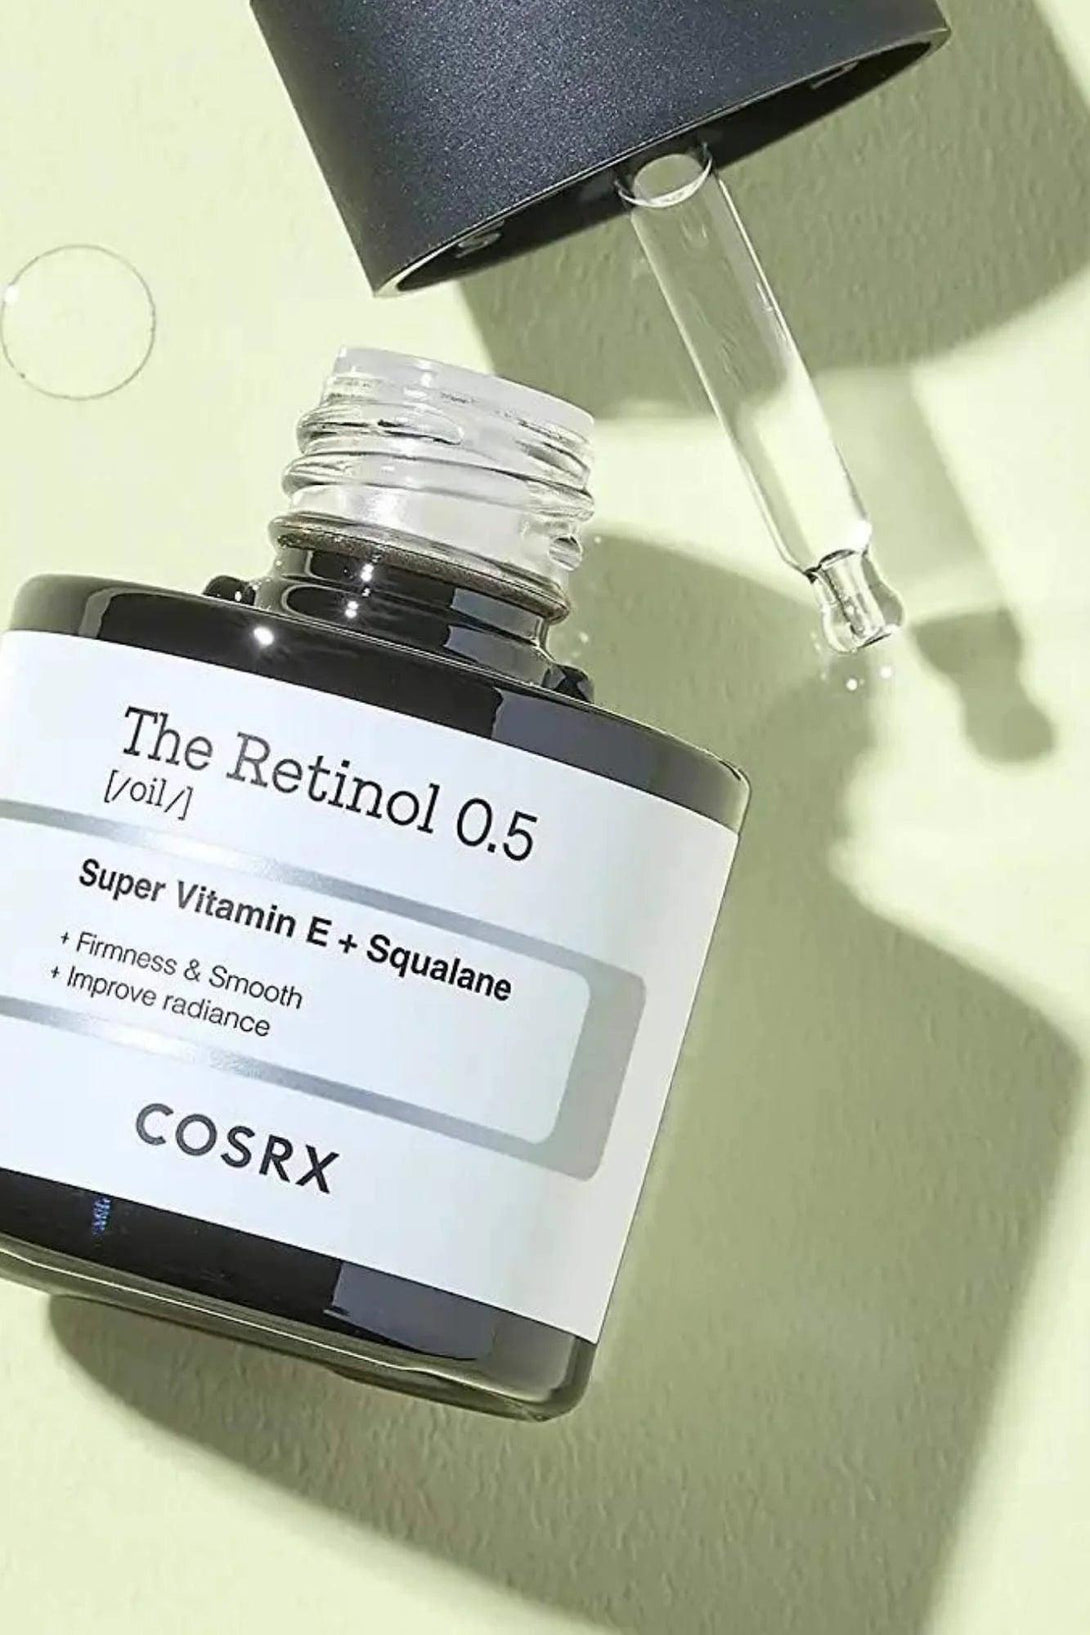 Cosrx - The Retinol 0.5 Oil - 20ml - Cosmetic Holic